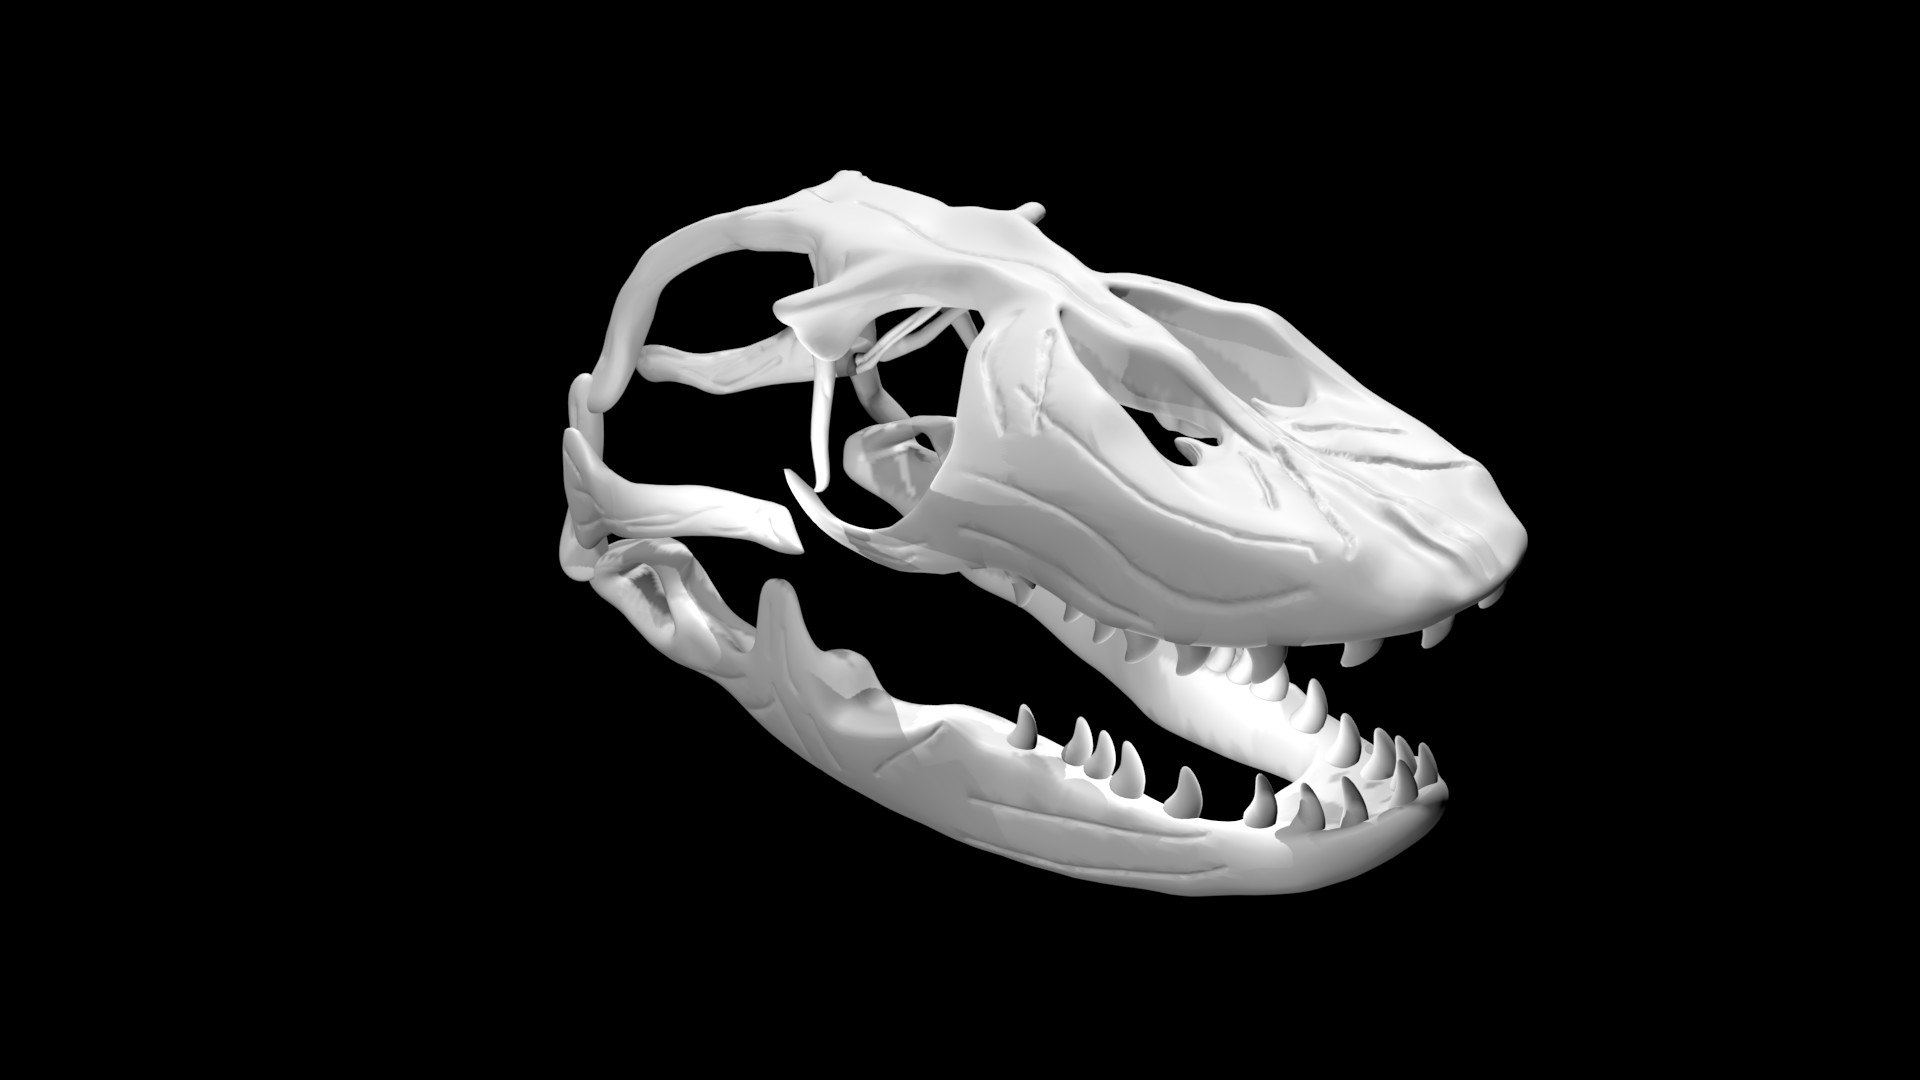 komodo dragon skull